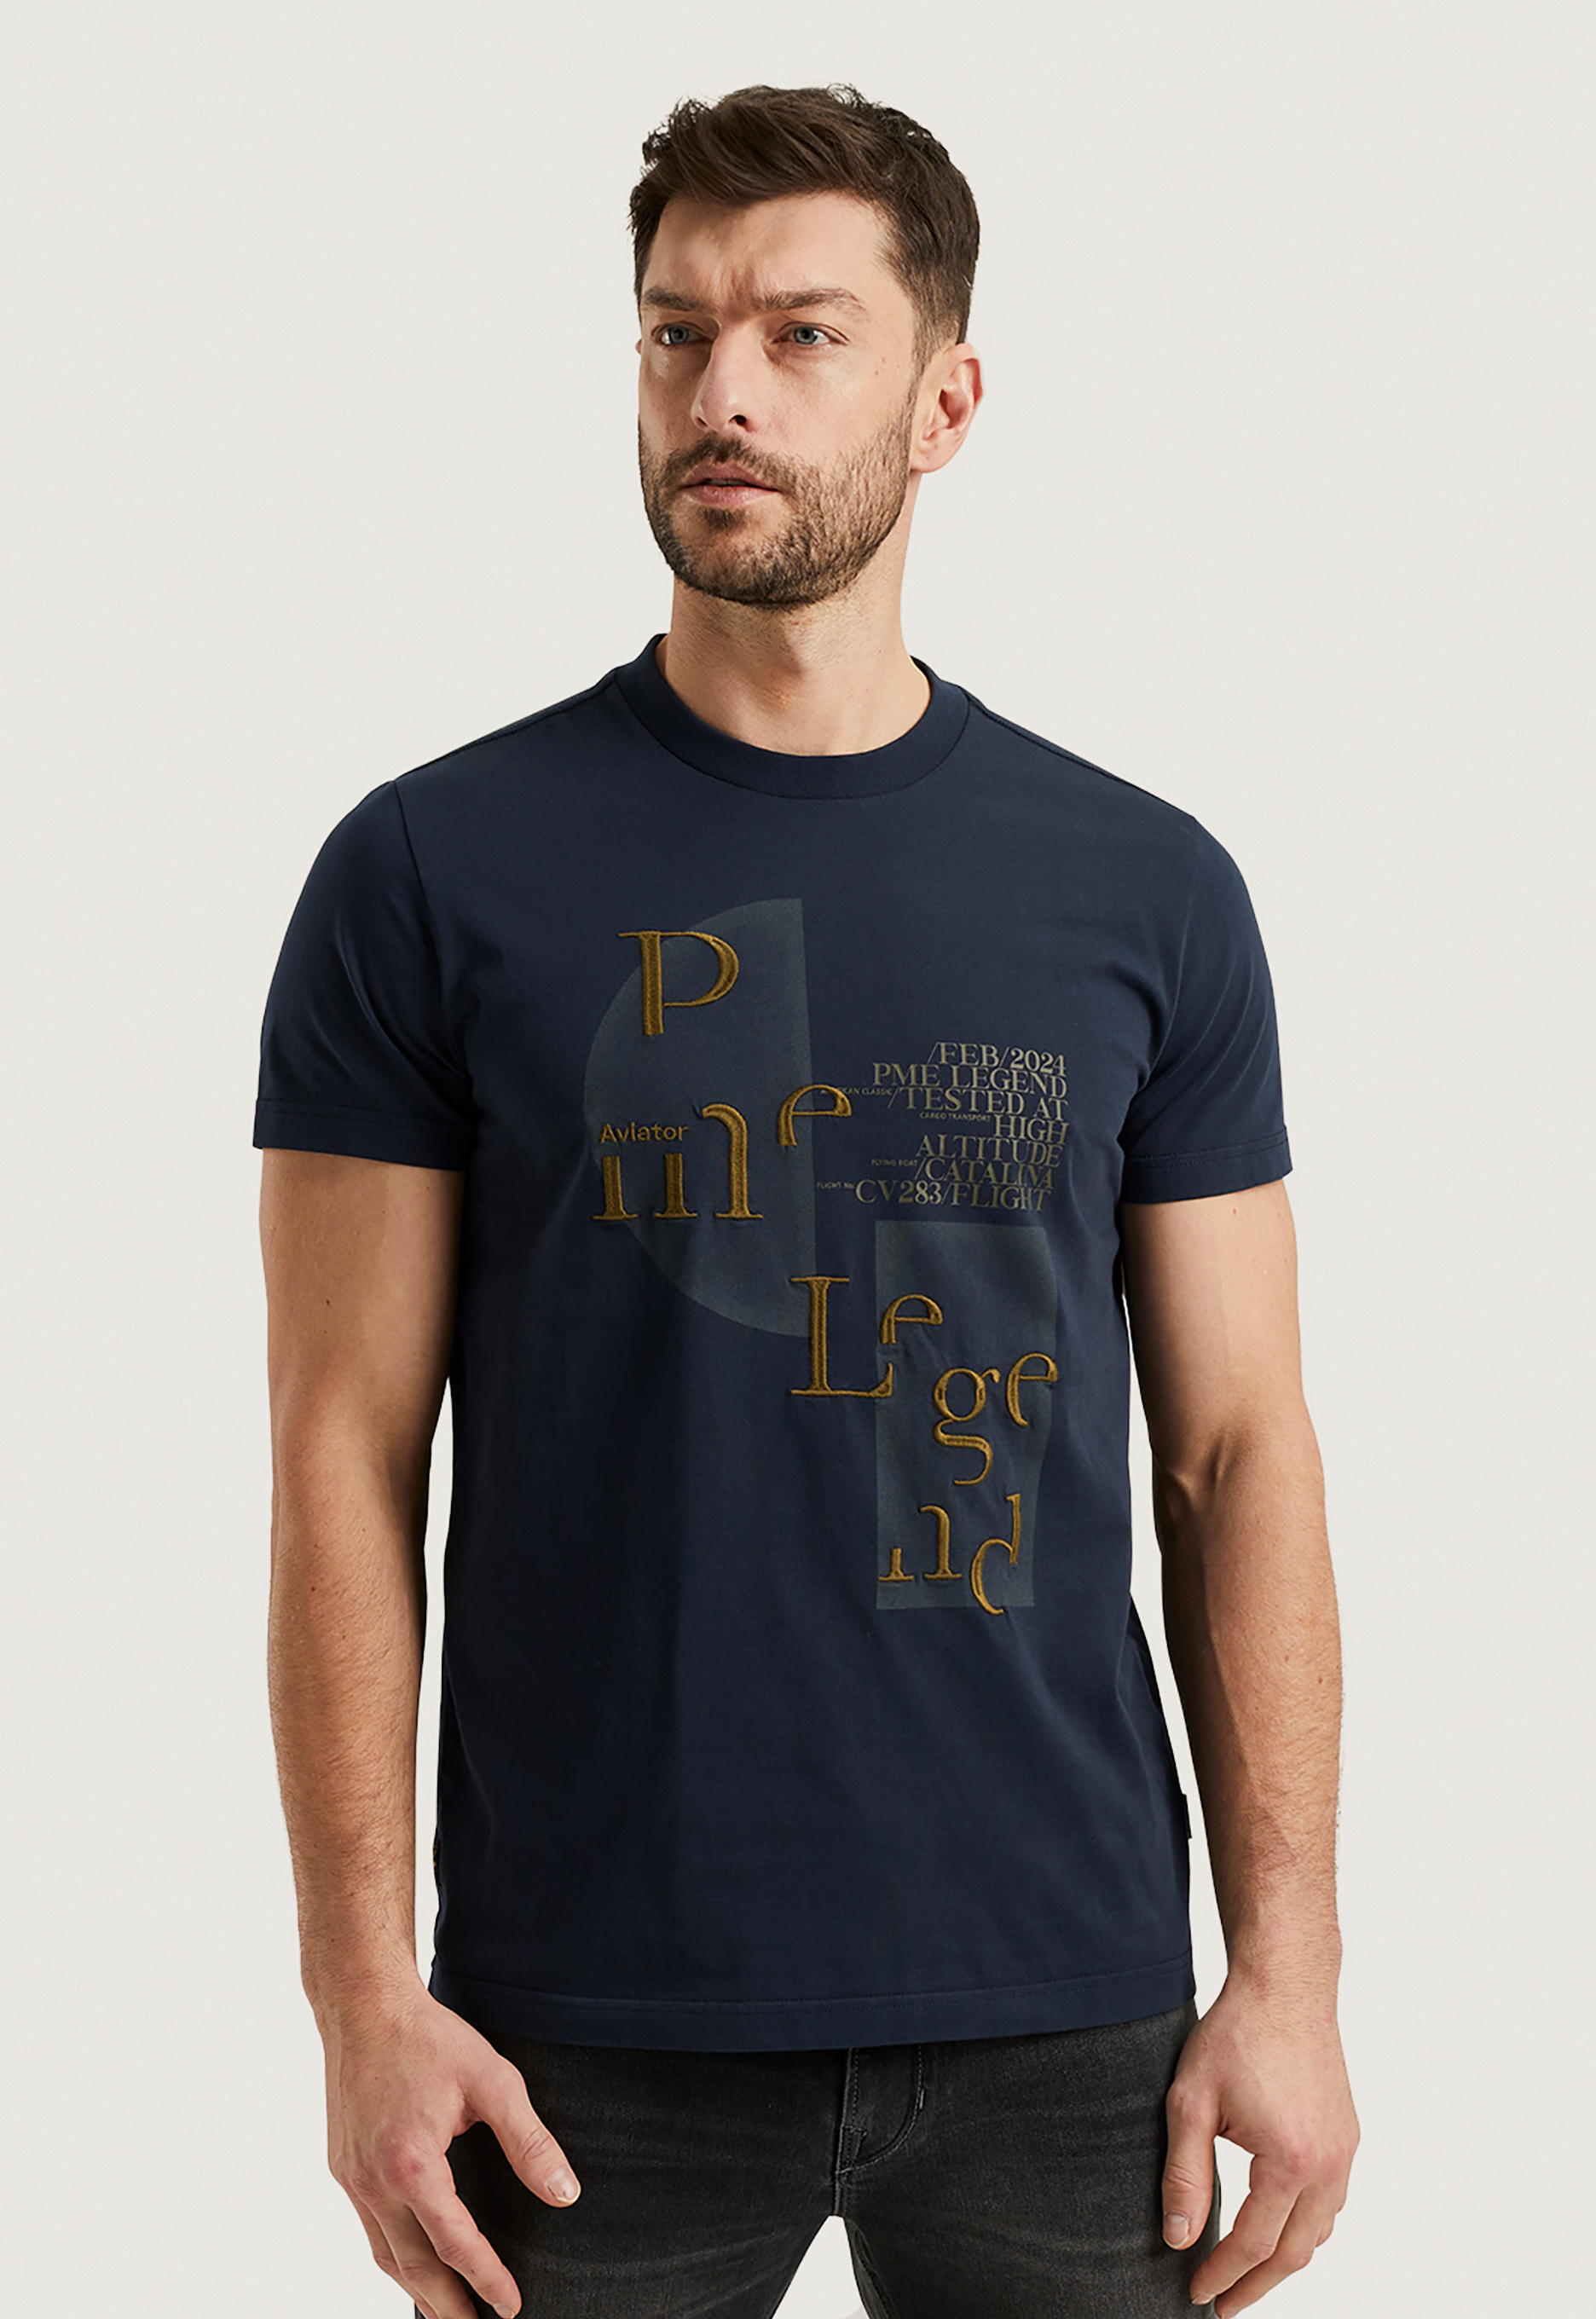 Pme legend Single Jersey T-shirt